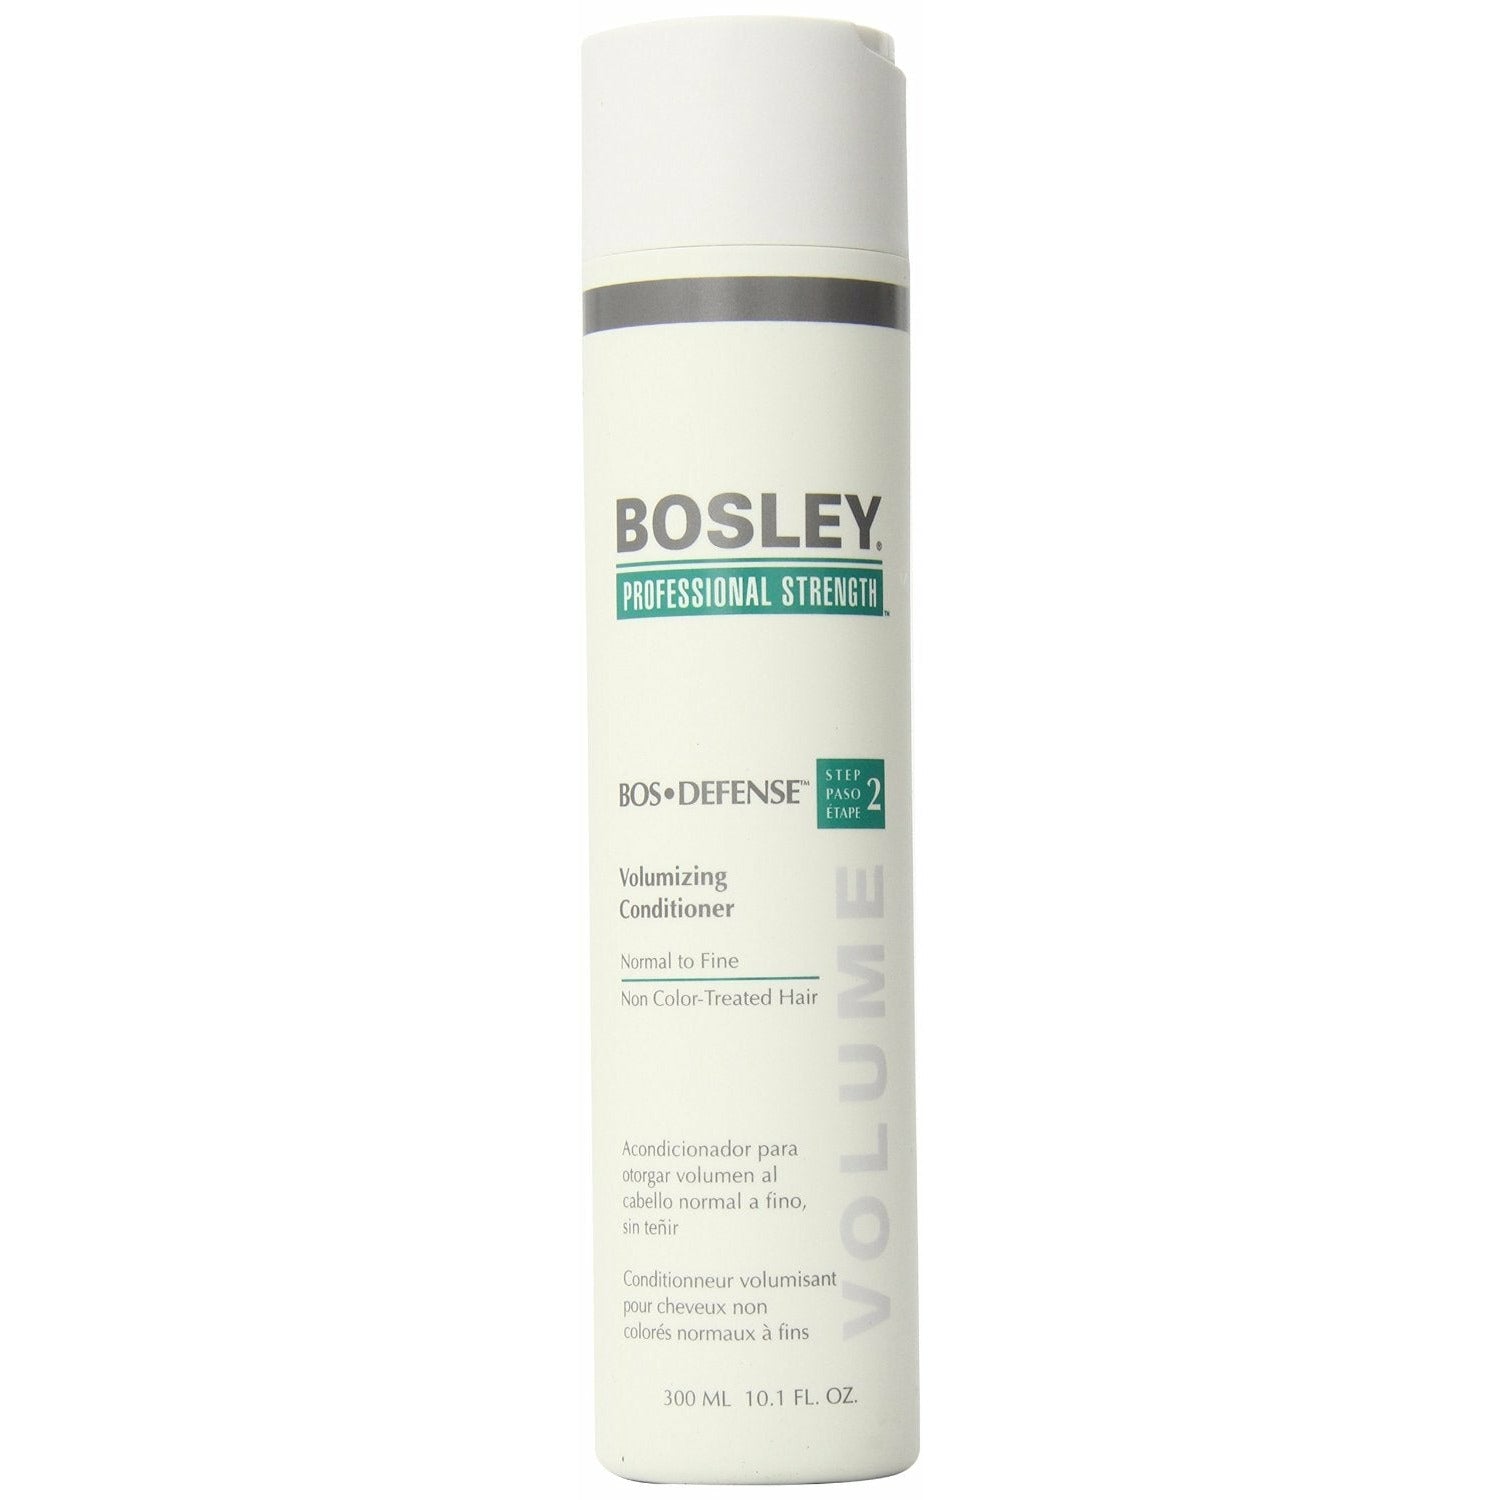 Bosley Bos Defense Volumizing Conditioner for Non Color-Treated Hair 10.1 oz